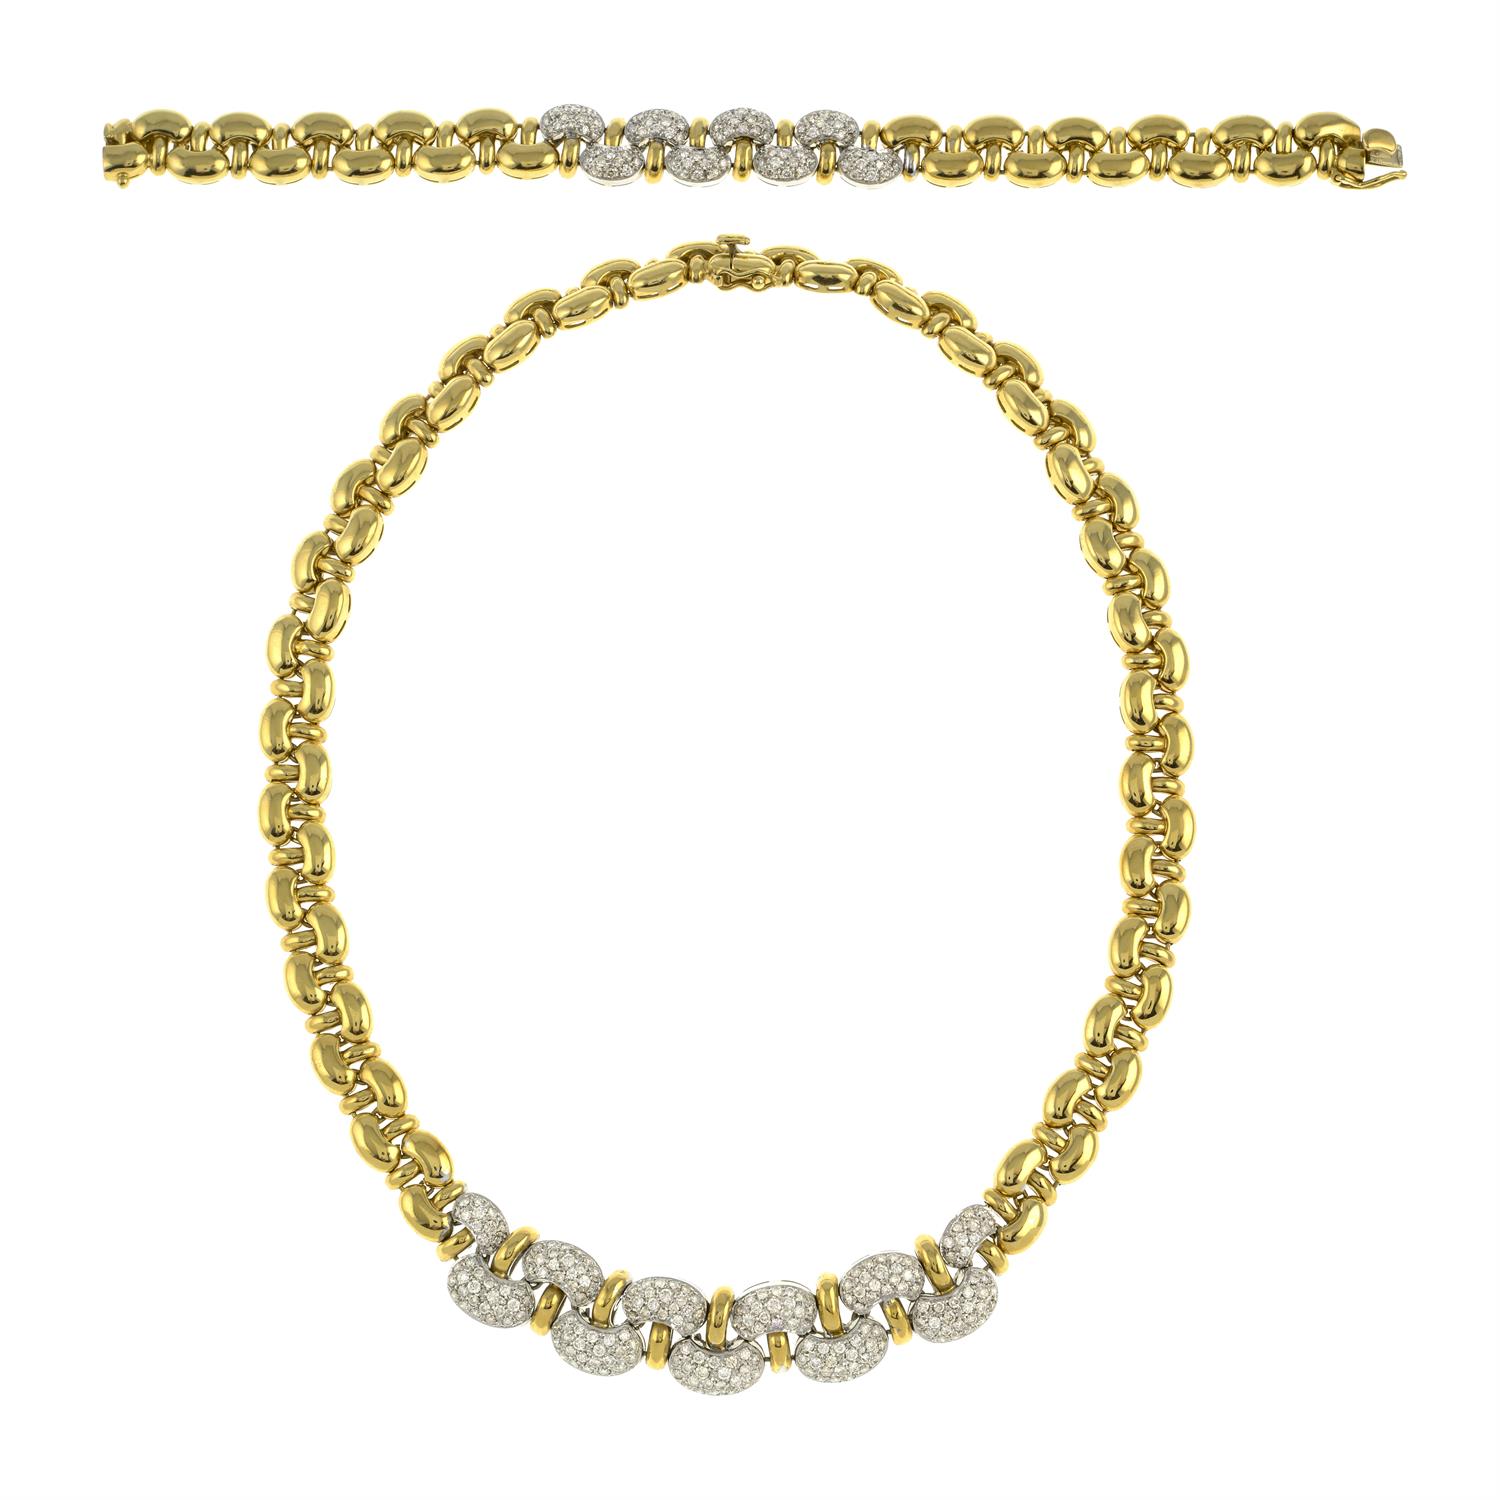 Diamond necklace and matching bracelet - Image 2 of 7